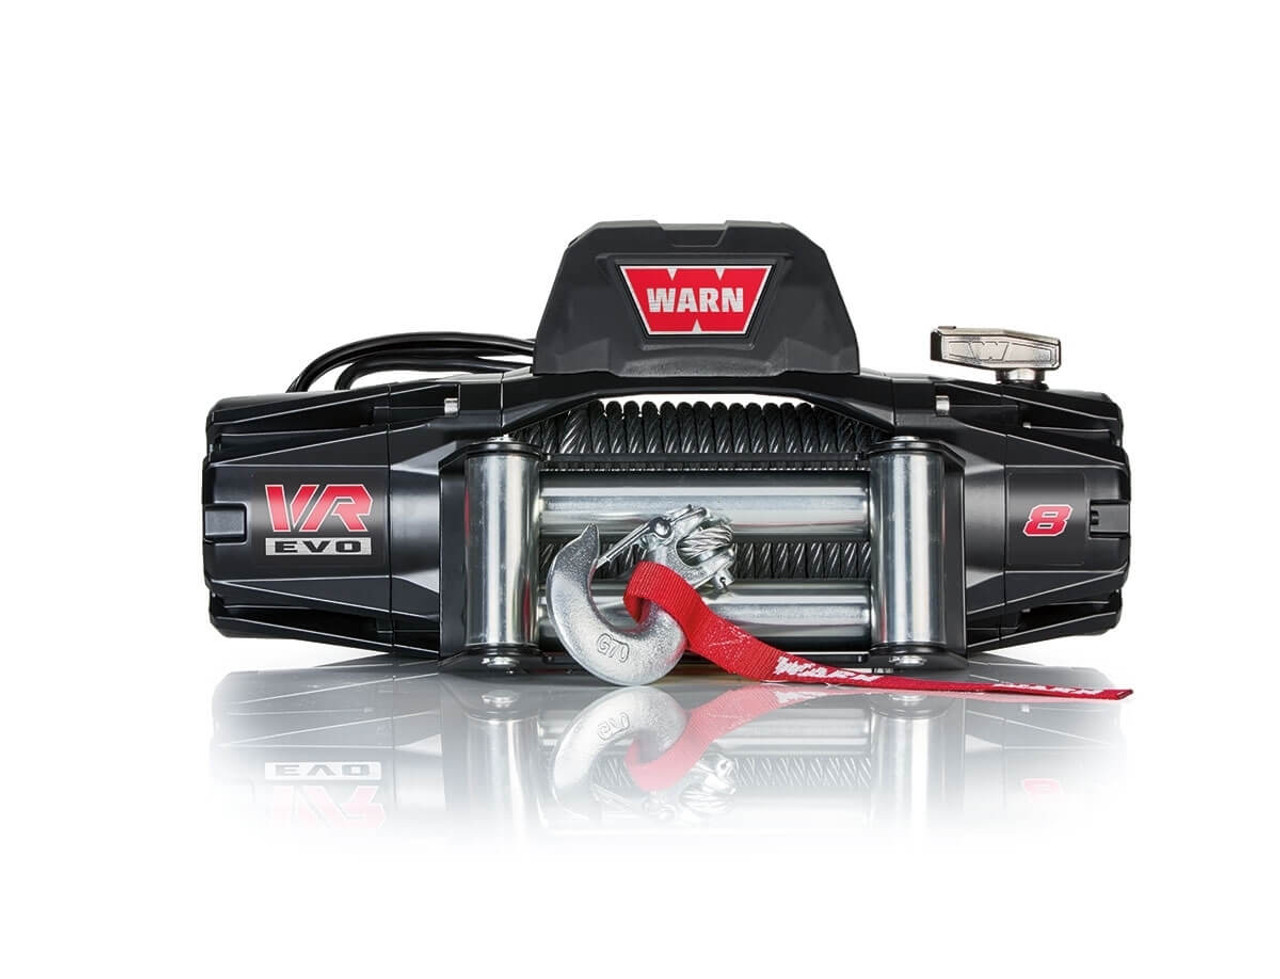  Warn VR EVO 8 Standard Duty 8,000 Lb Winch With Wire Rope - 103250